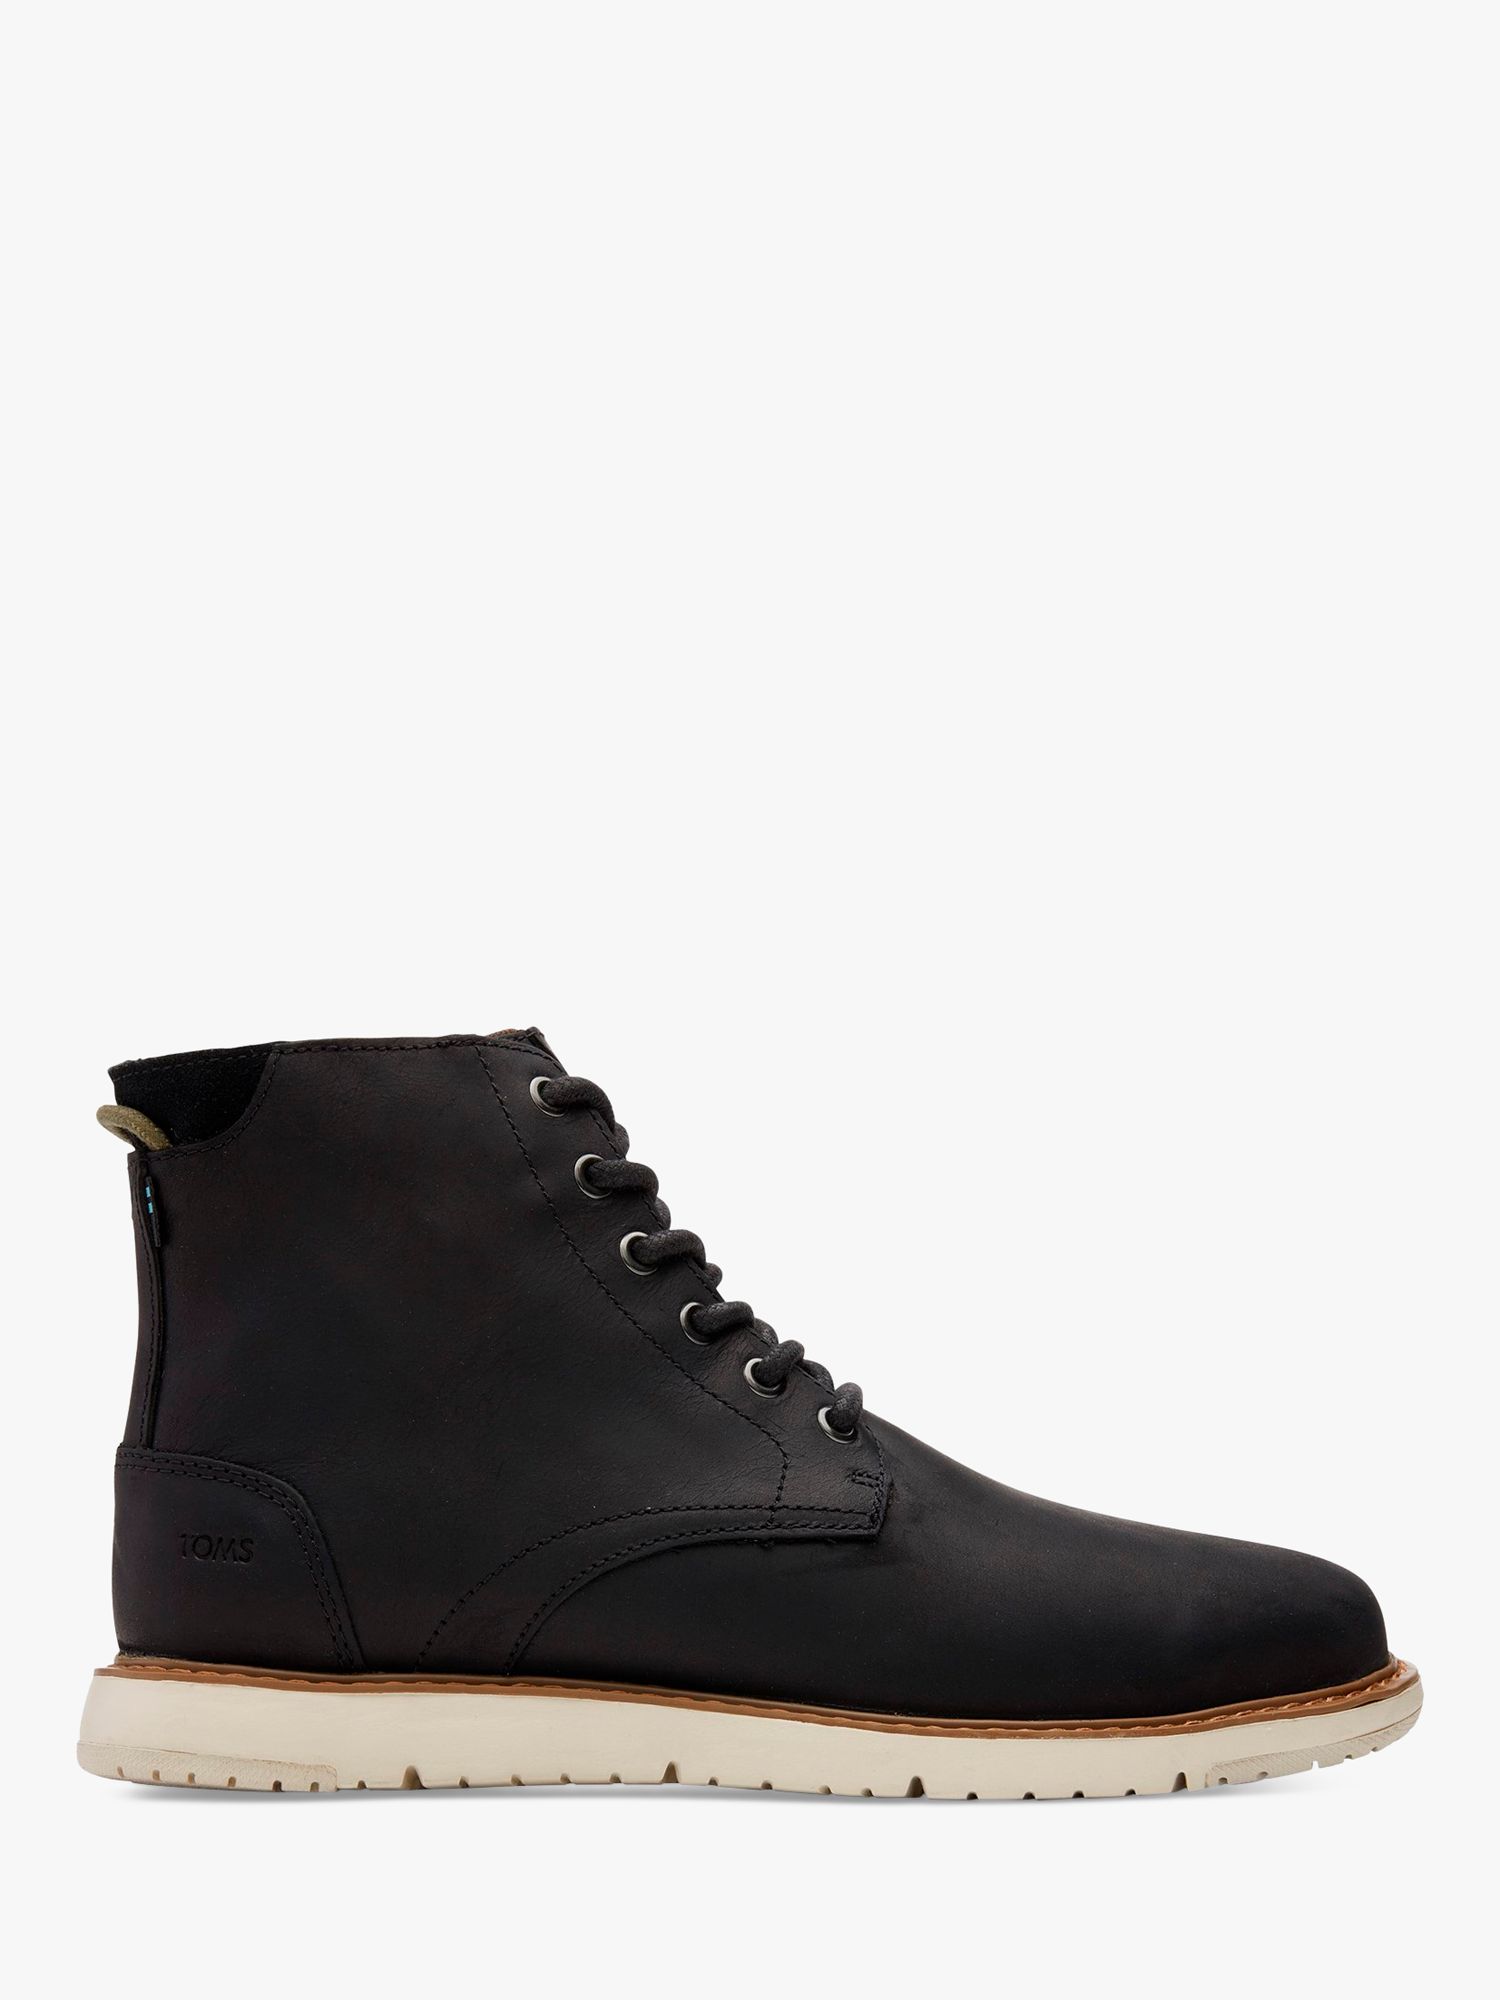 TOMS Hillside Leather Boots, Black at John Lewis & Partners